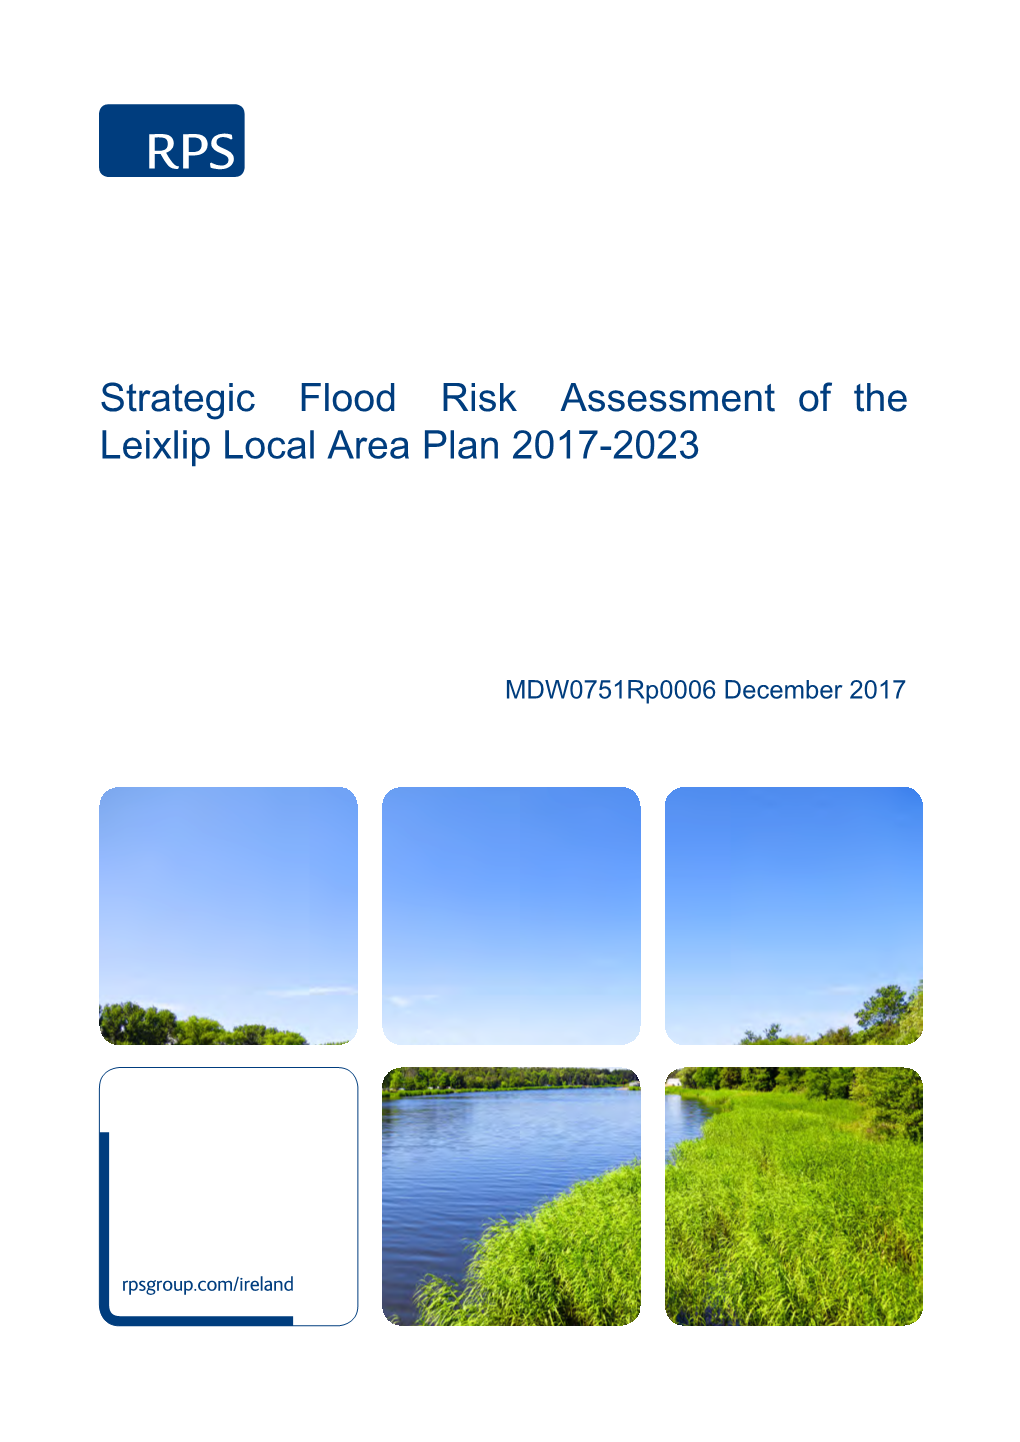 Strategic Flood Risk Assessment of the Leixlip Local Area Plan 2017-2023